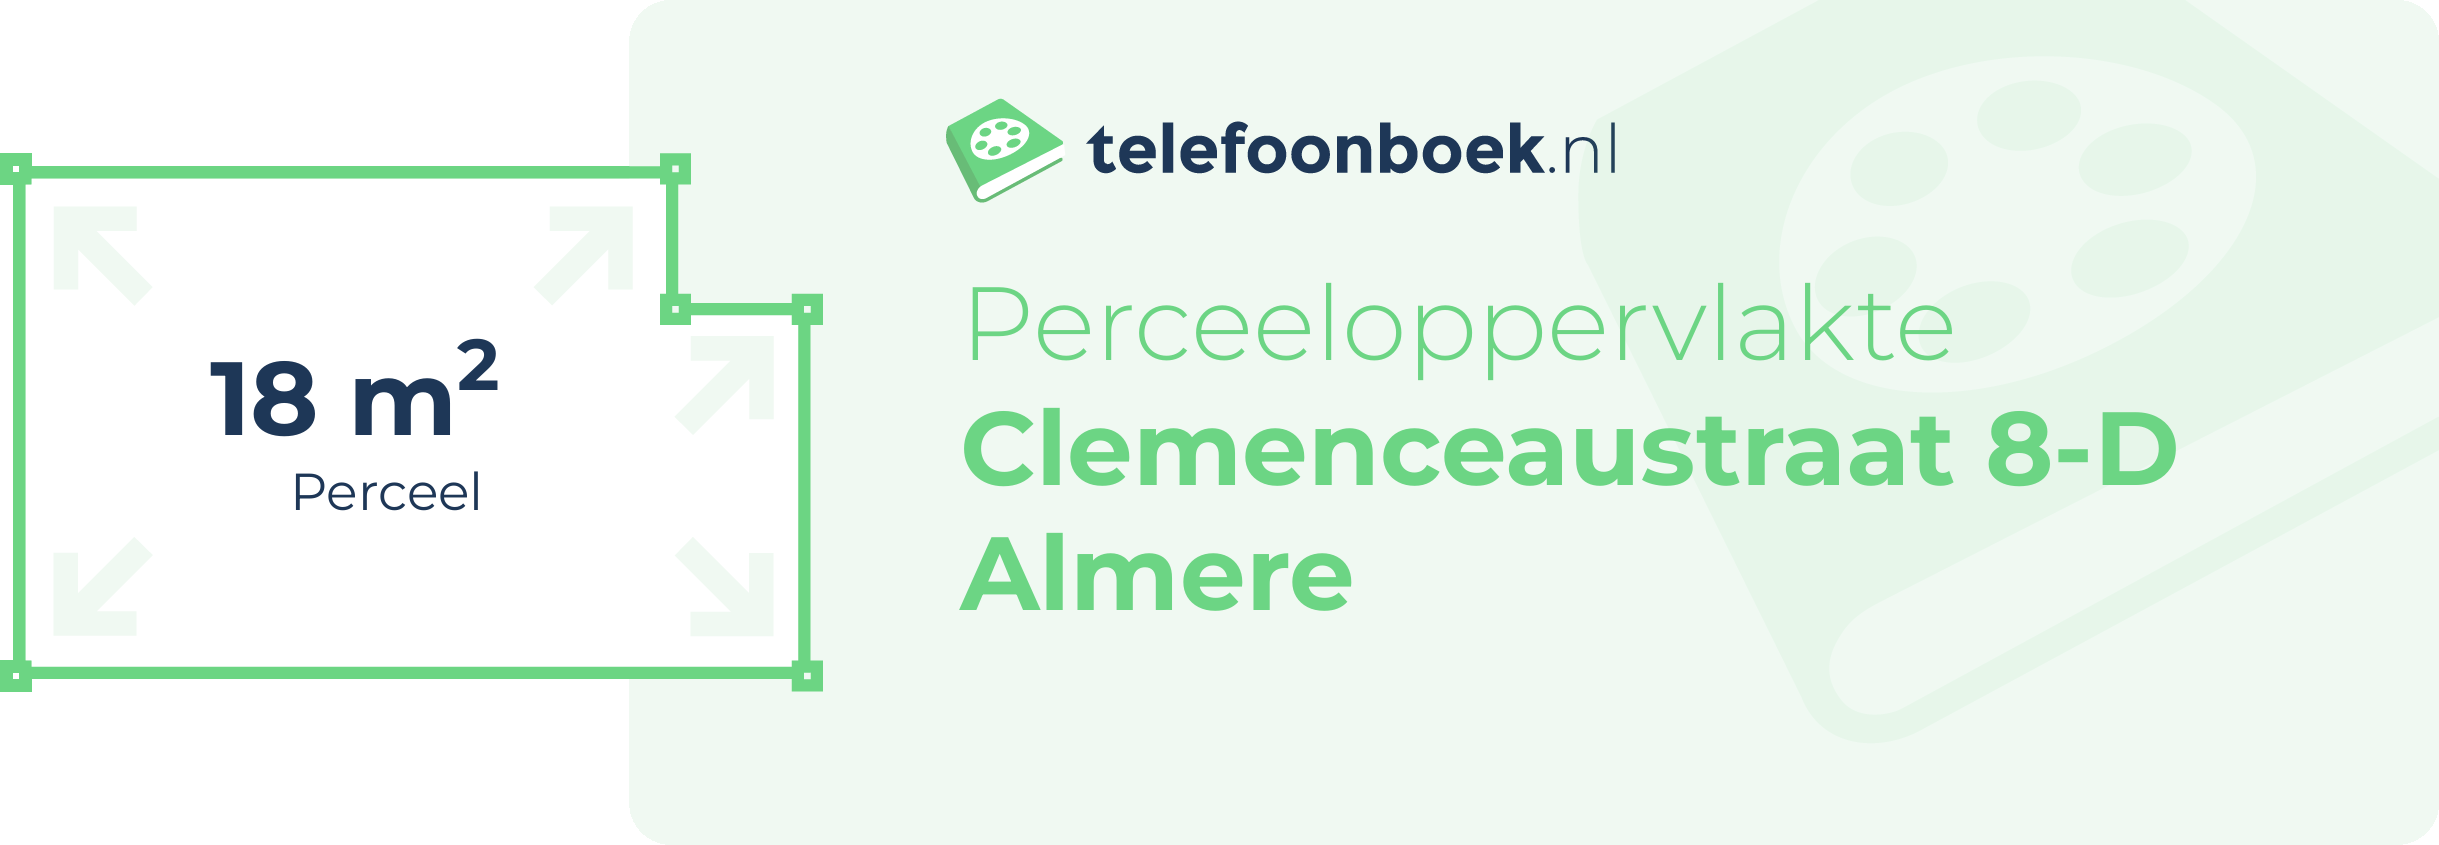 Perceeloppervlakte Clemenceaustraat 8-D Almere